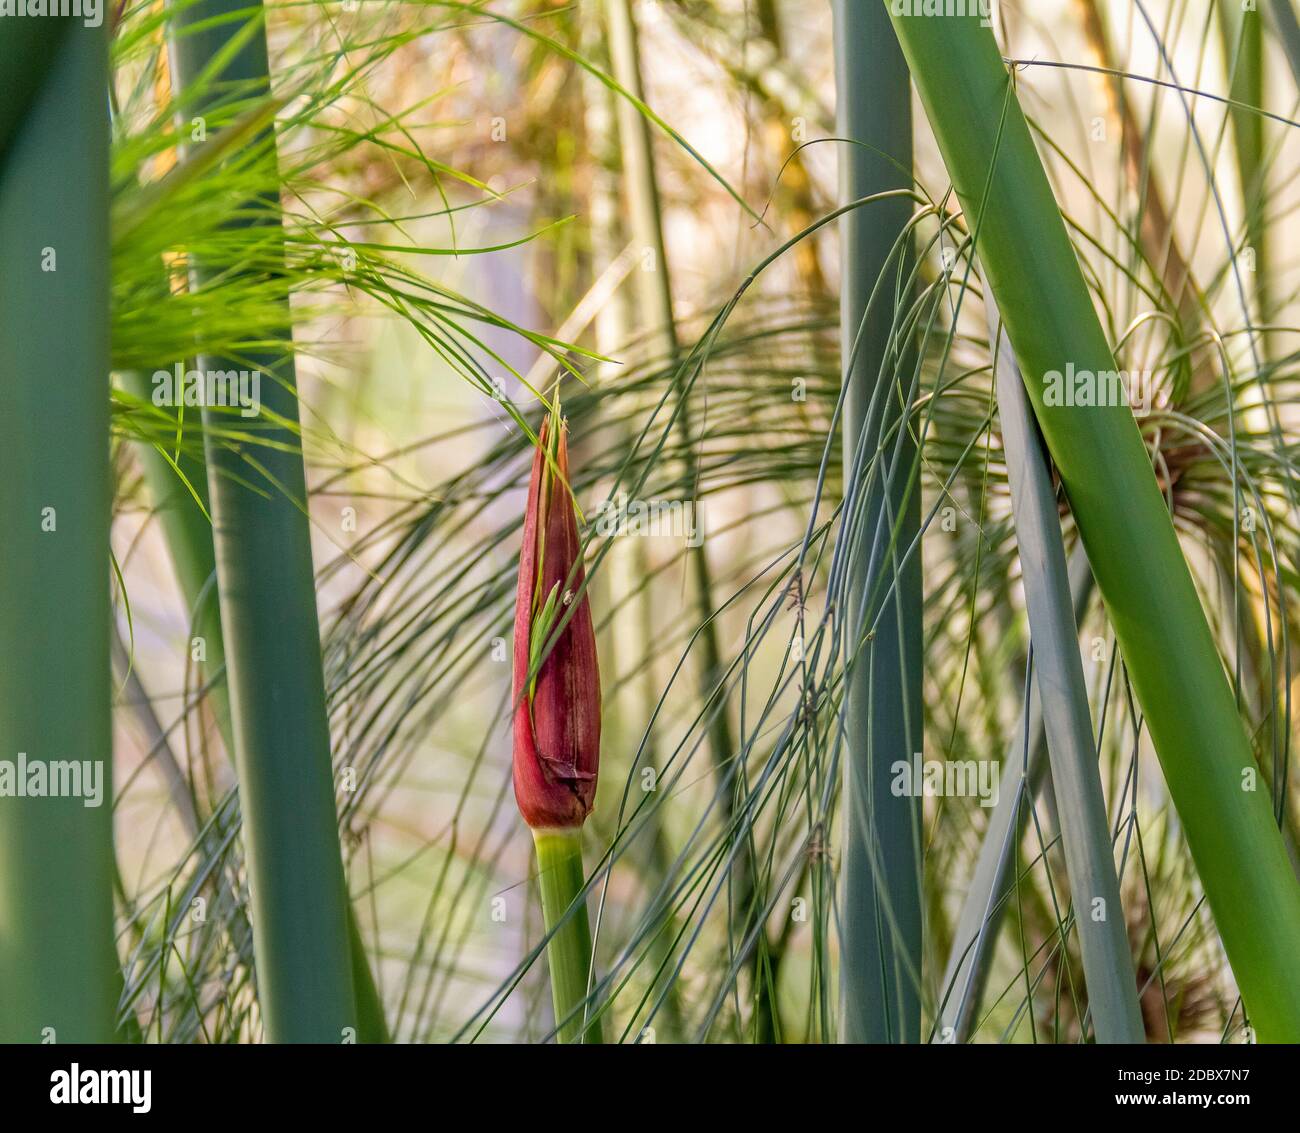 full frame closeup shot showing some nile grass vegetation Stock Photo